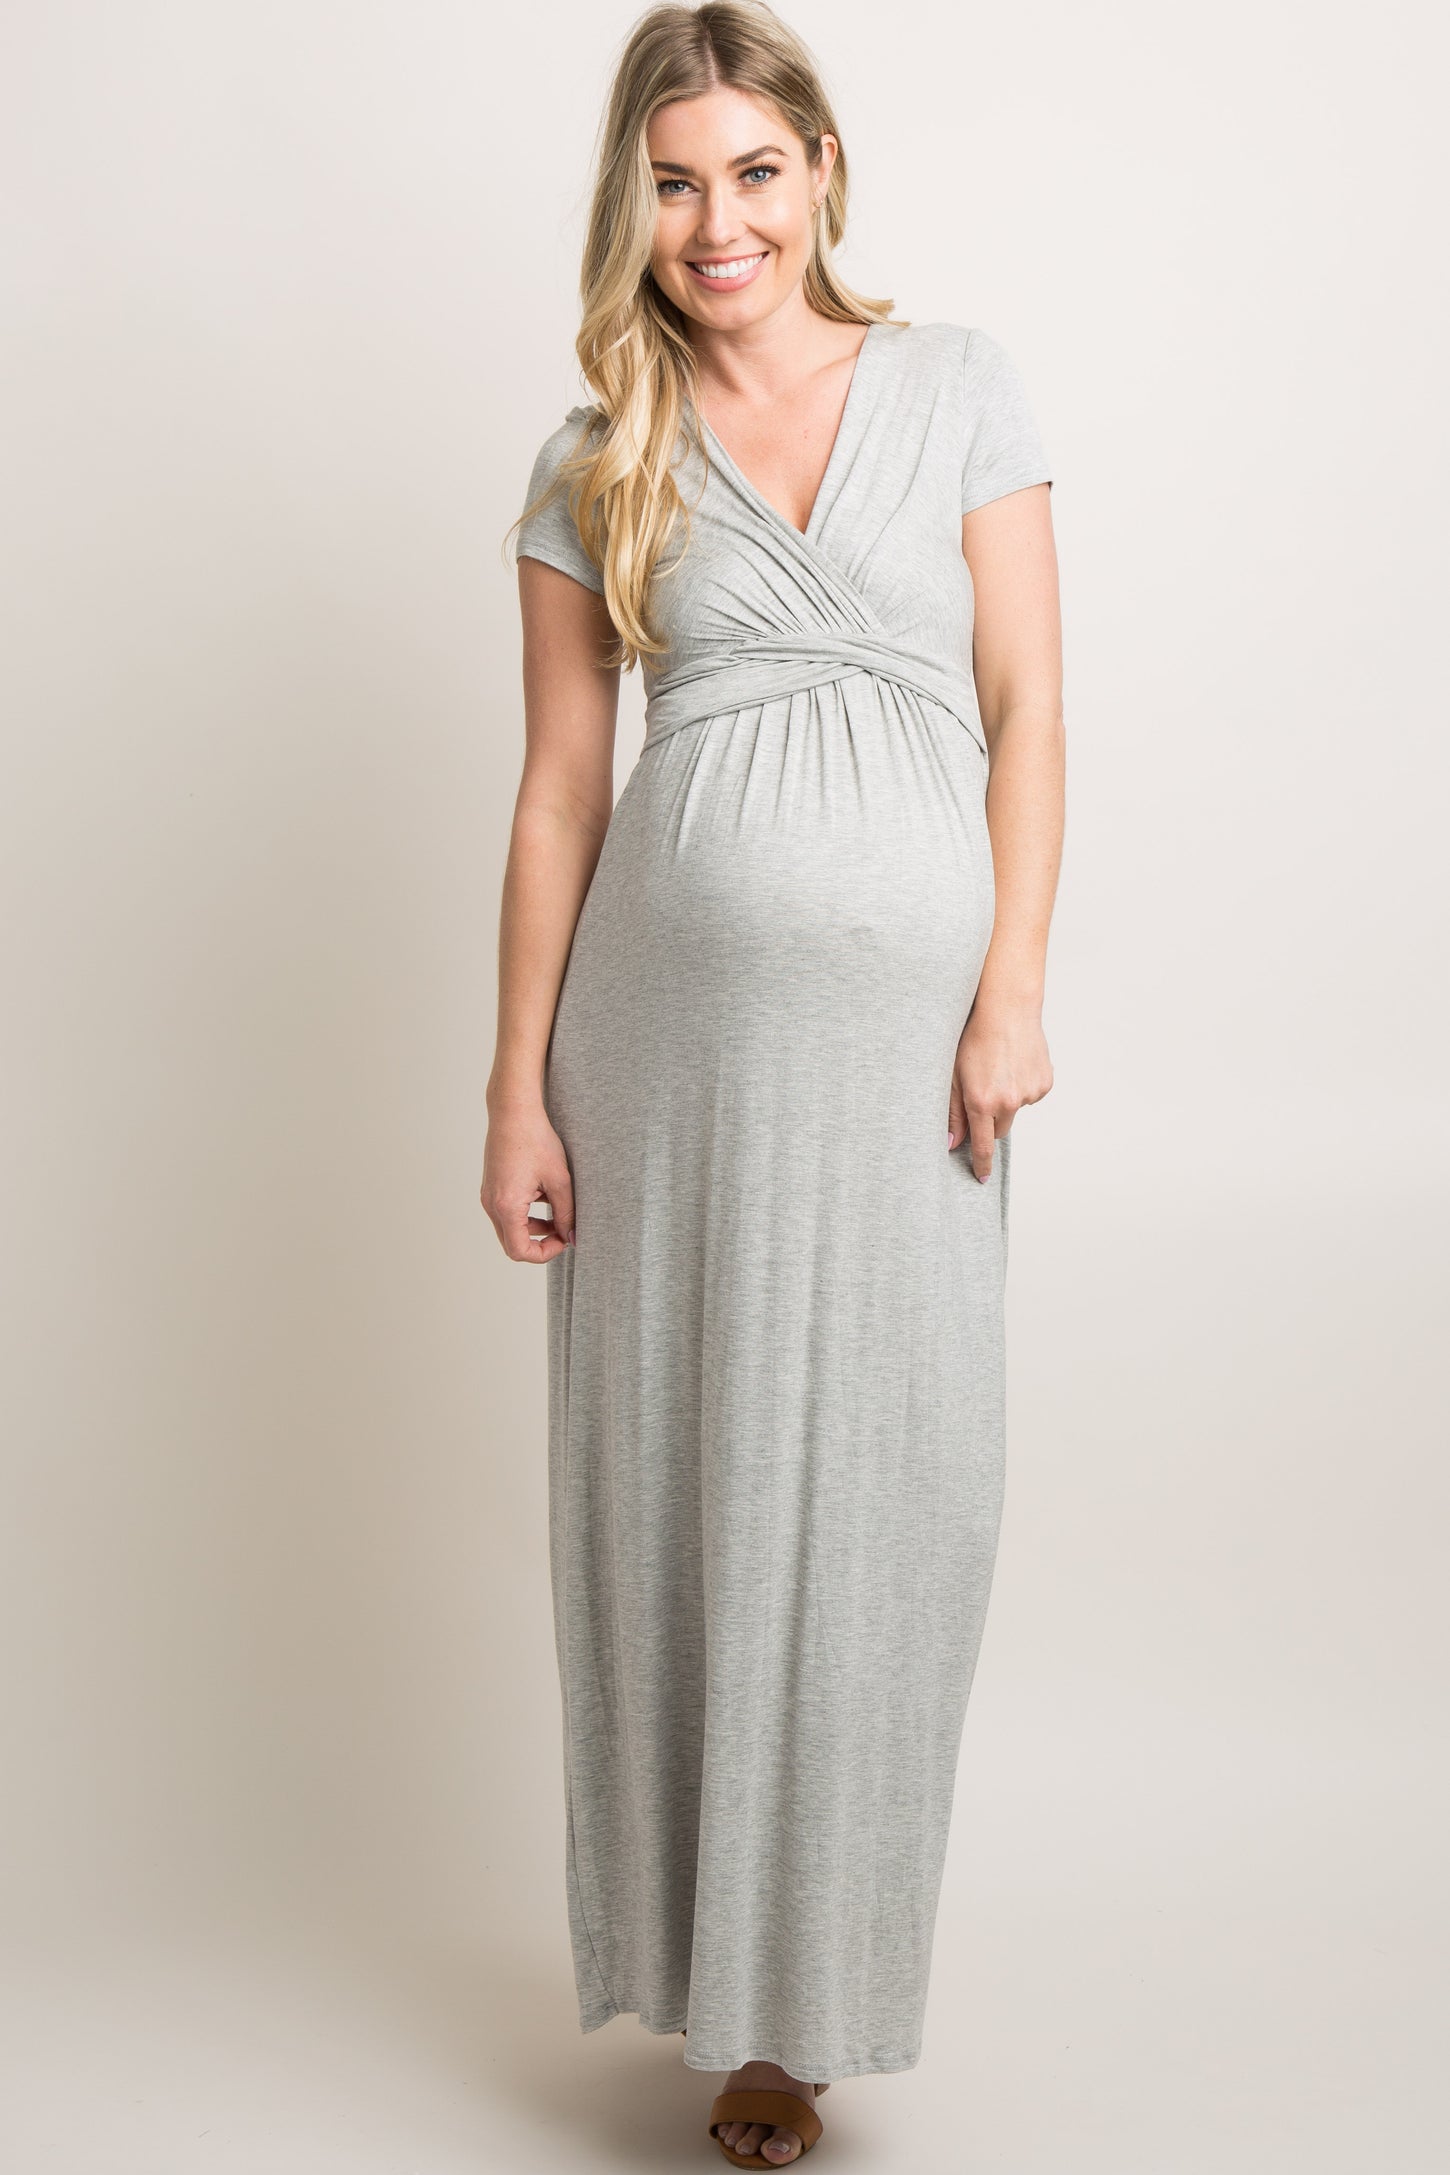 PinkBlush Heather Grey Draped Maternity/Nursing Maxi Dress